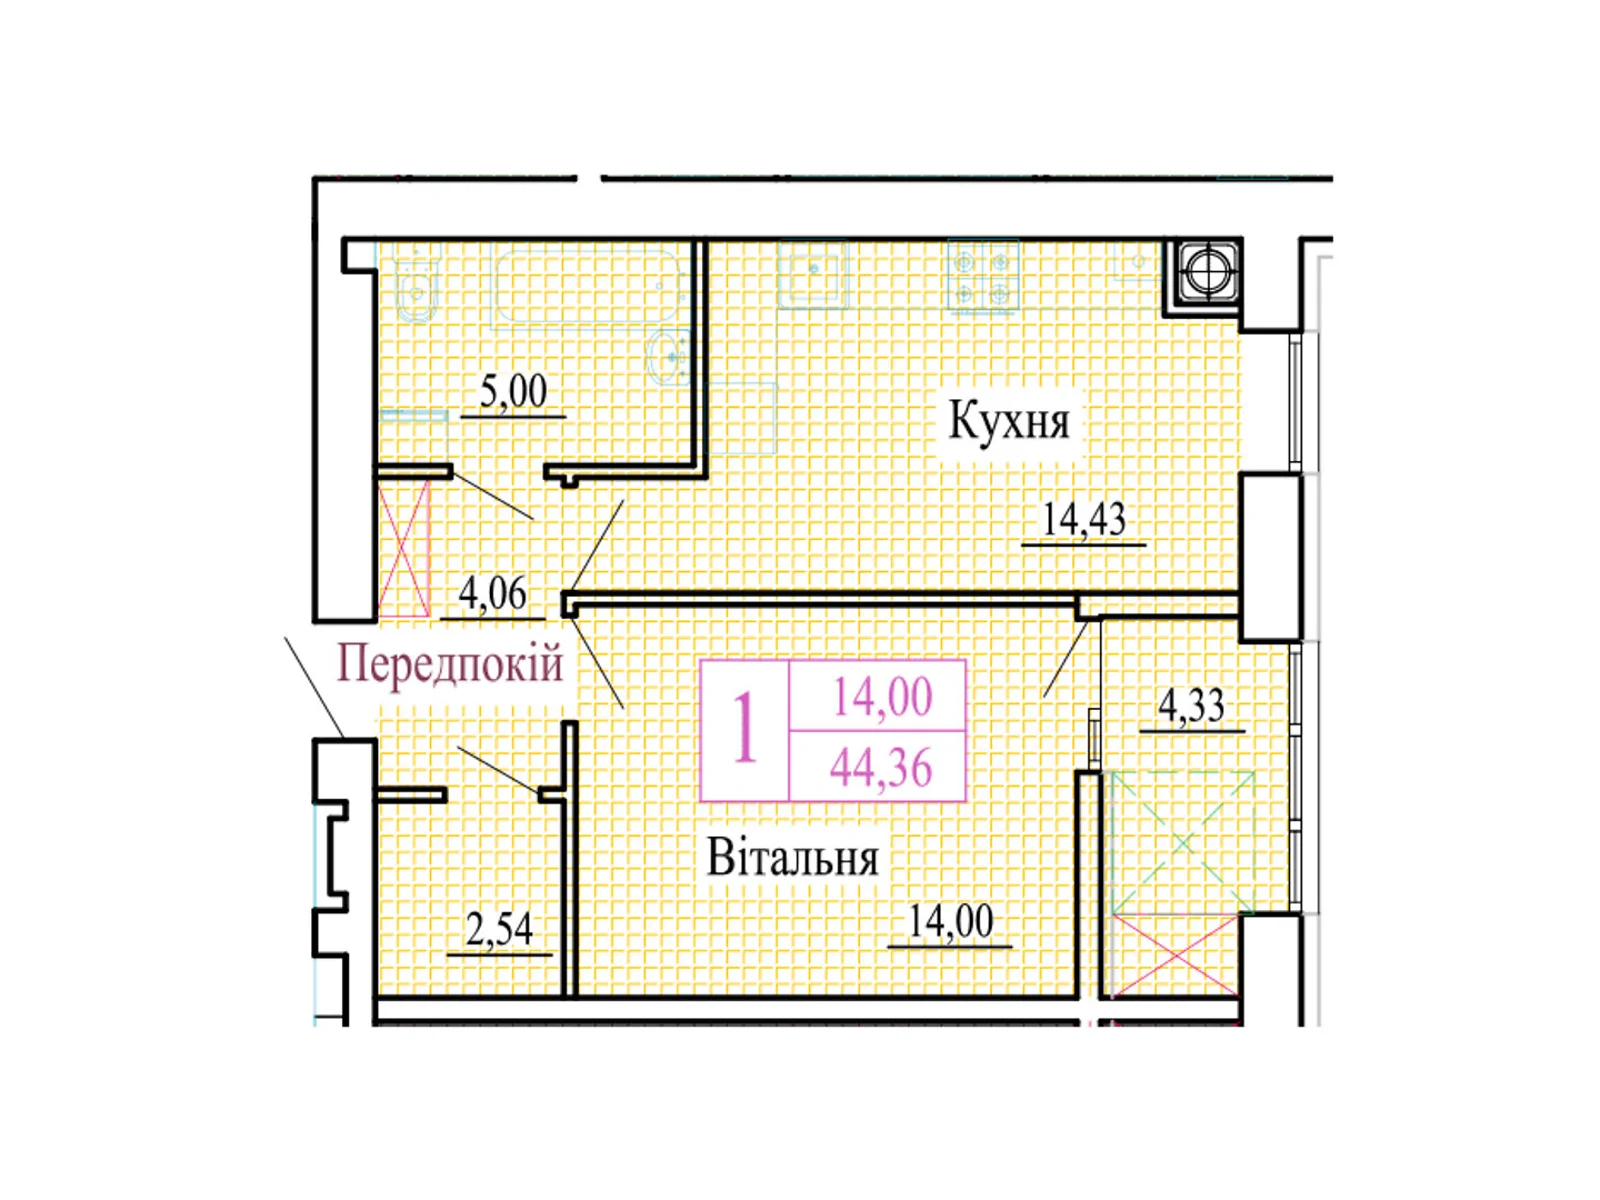 1-кімнатна квартира 44.36 кв. м у Луцьку, цена: 35532 $